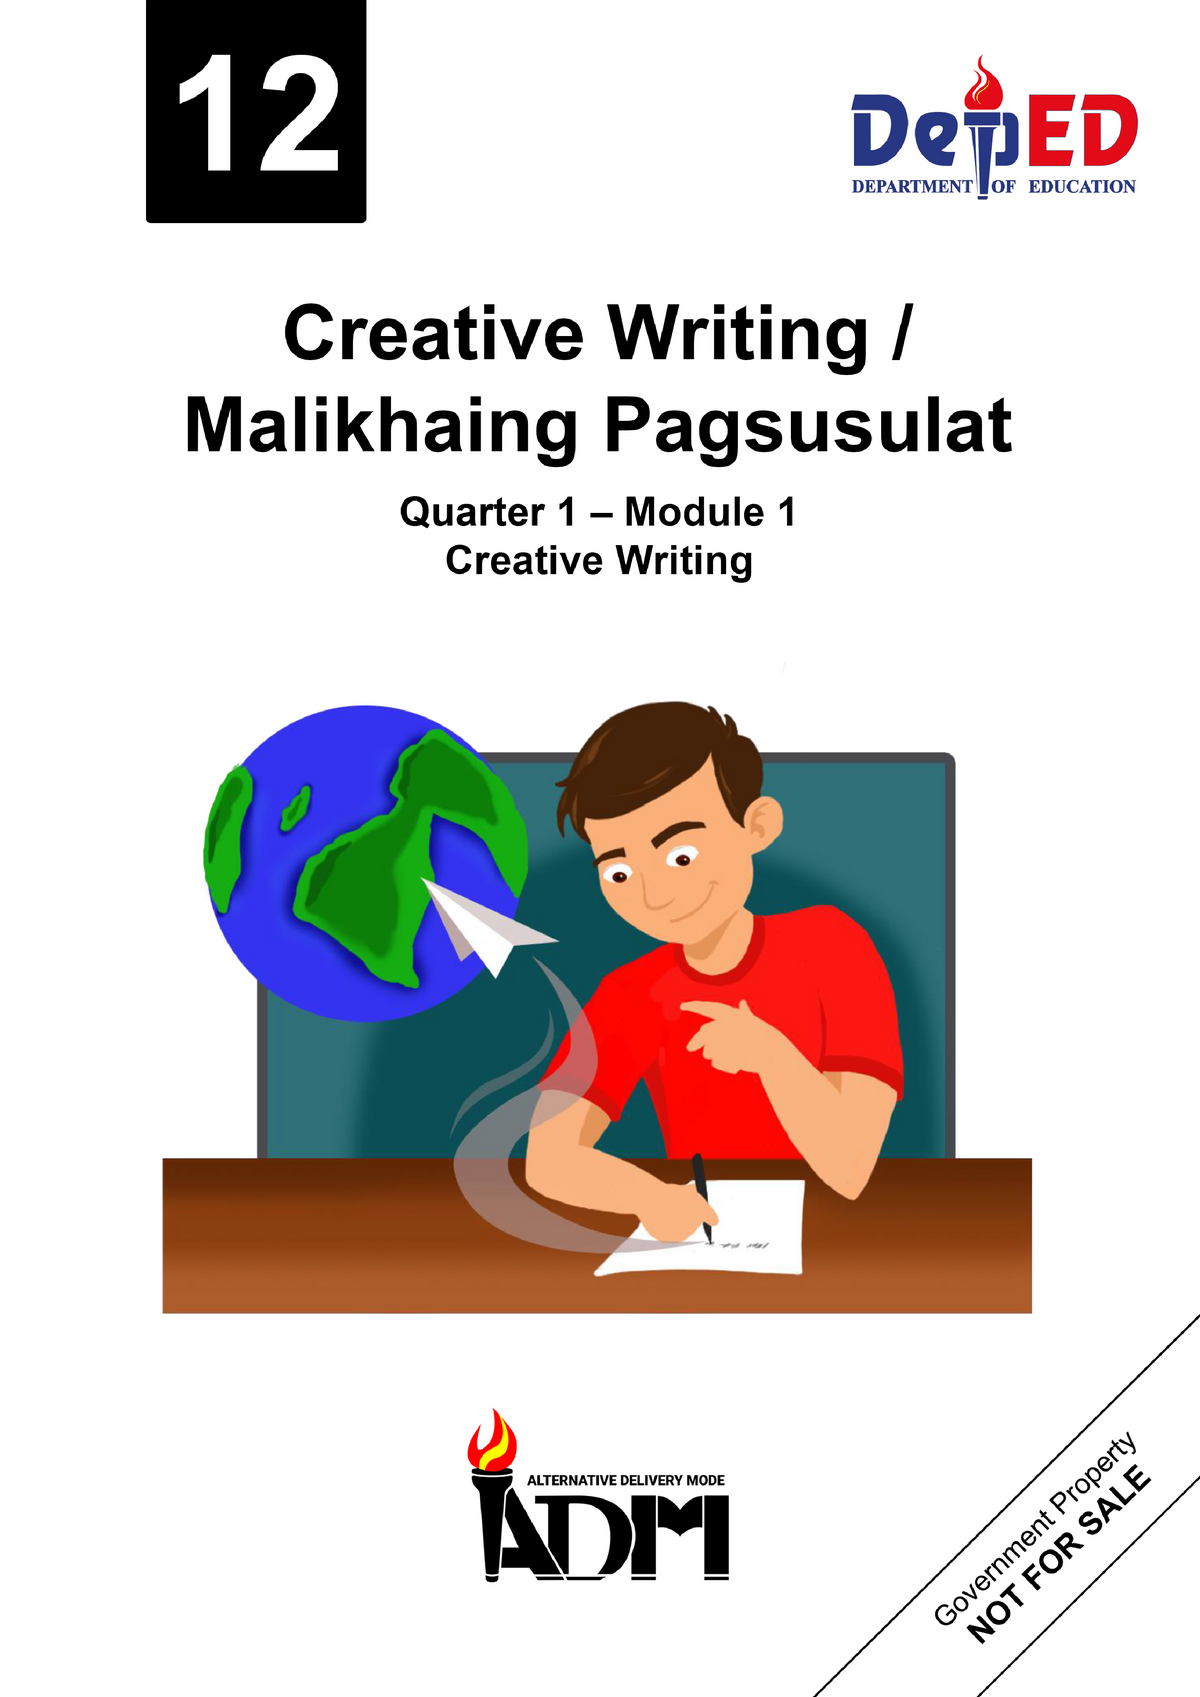 creative writing quarter 2 module 7